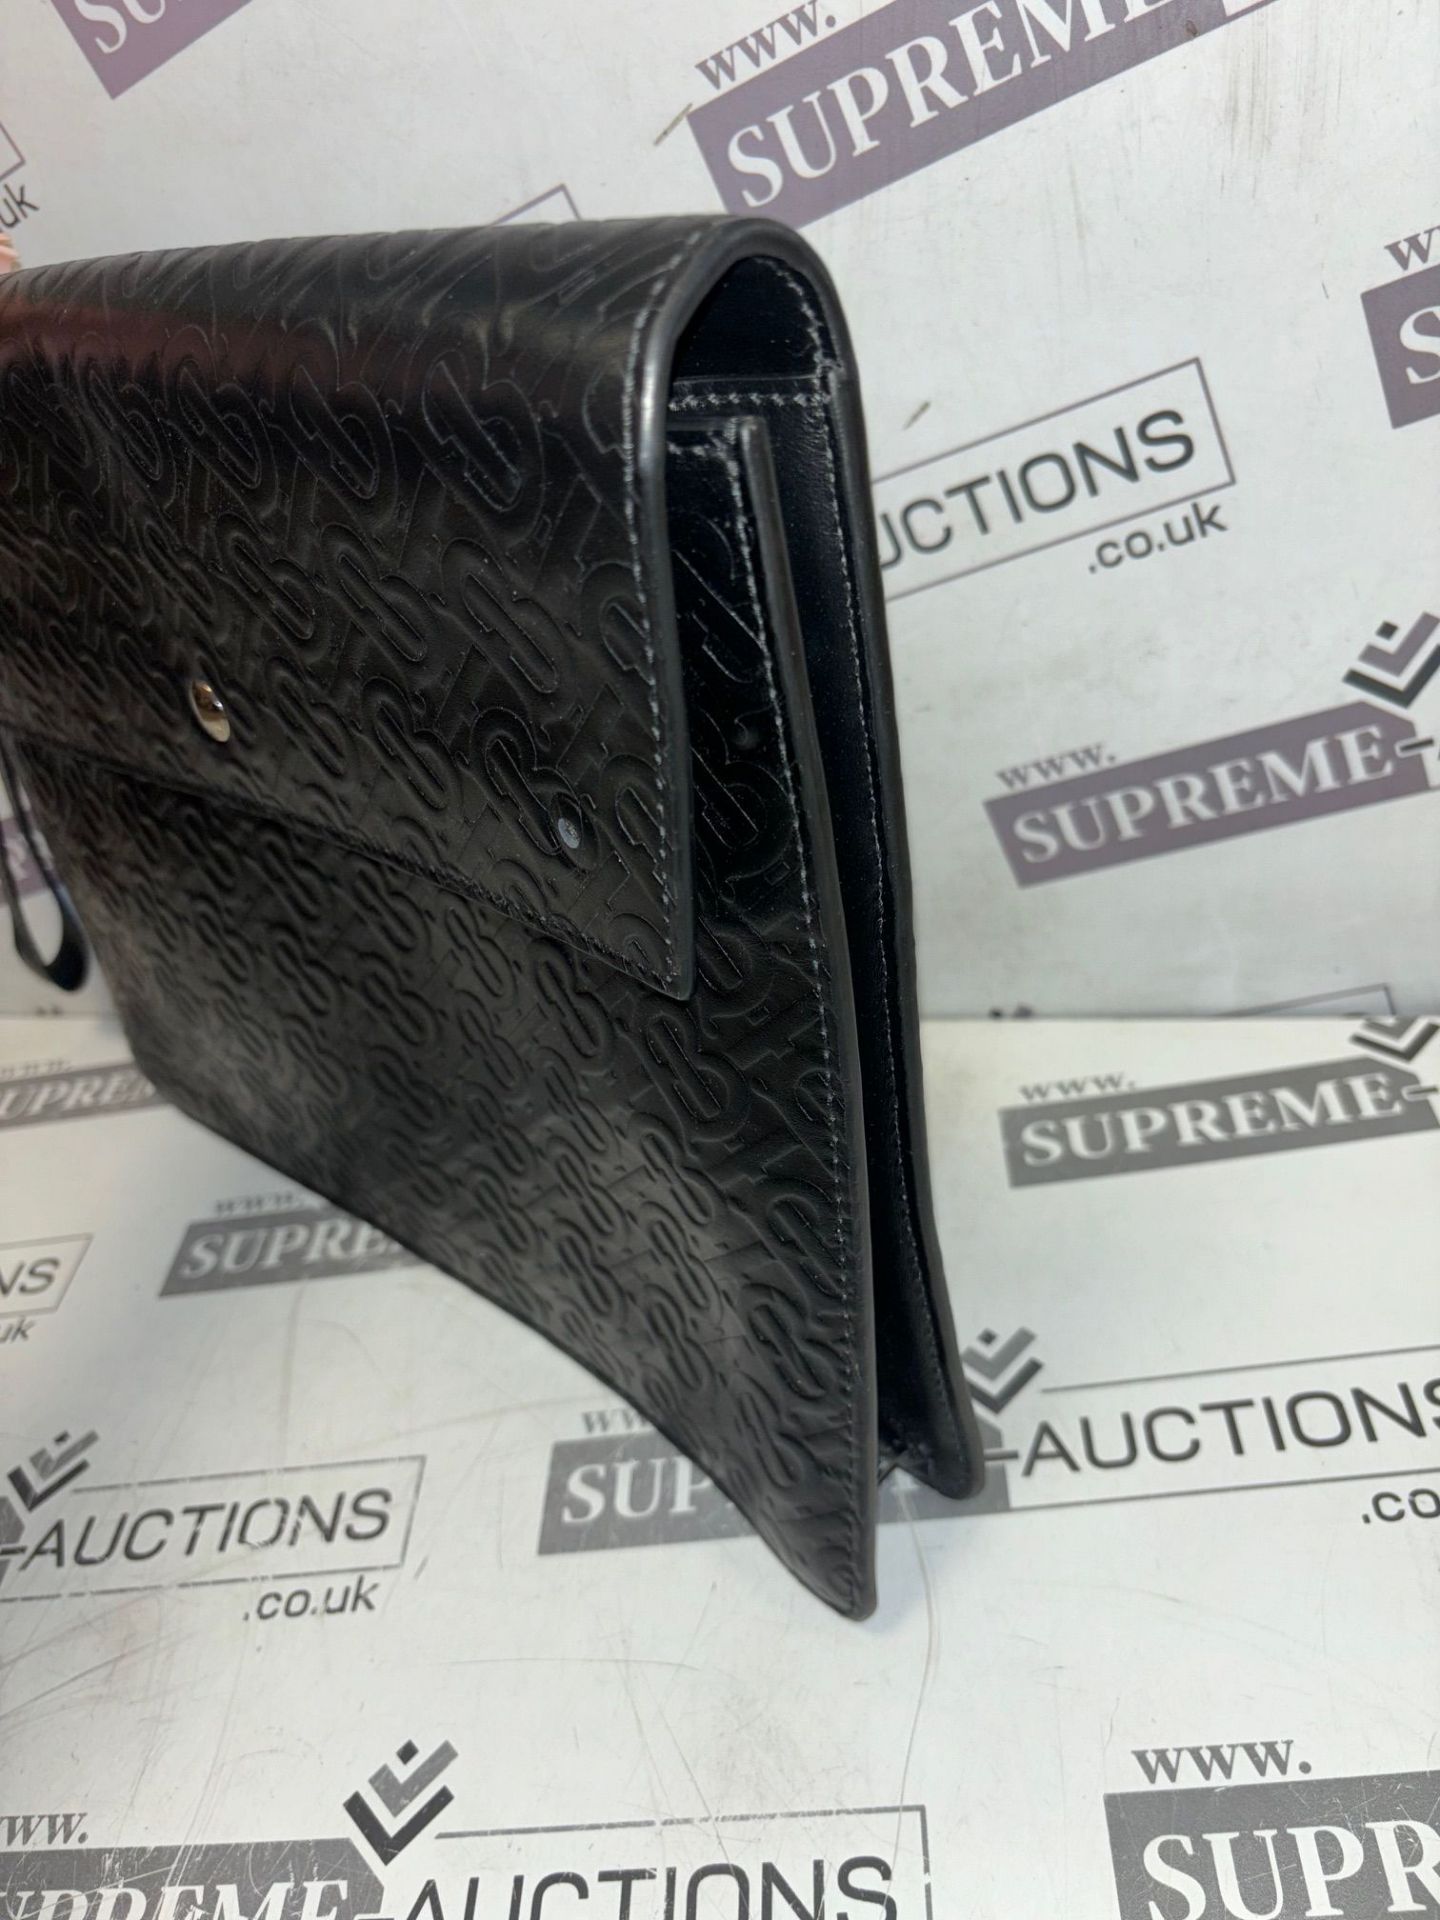 Genuine Burberry TB envelope Black Leather Clutch Bag 20/28 - Image 3 of 7